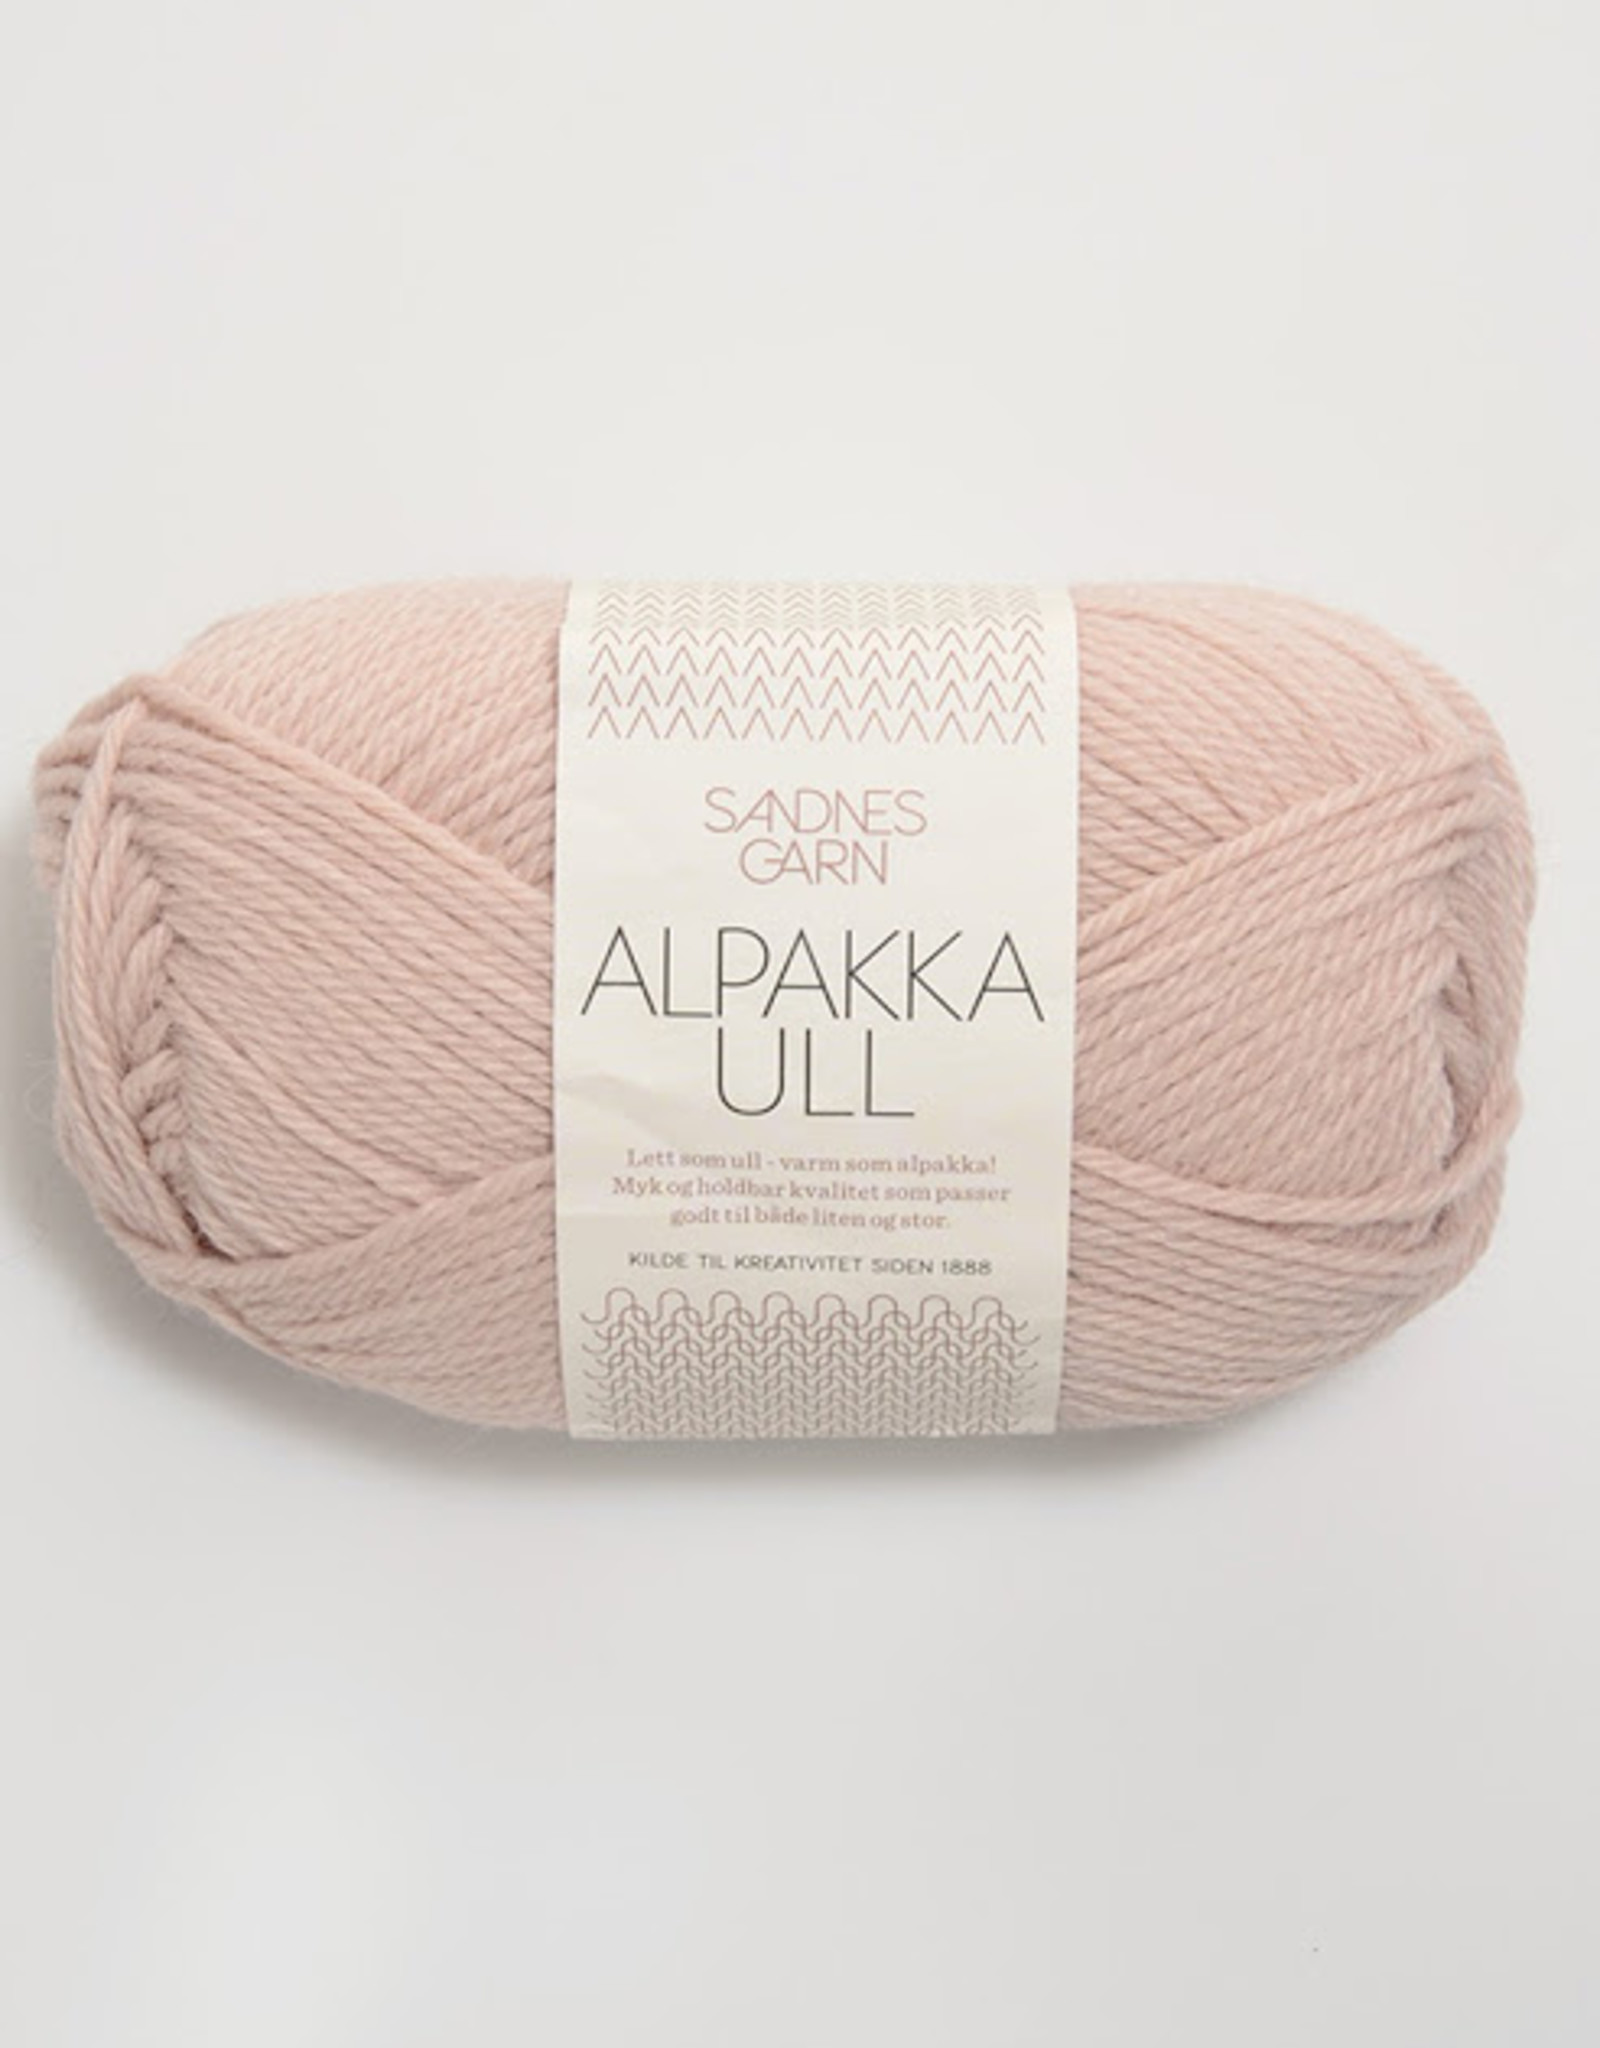 Ull 3511 powder pink - Purl - Yarn and Knitting